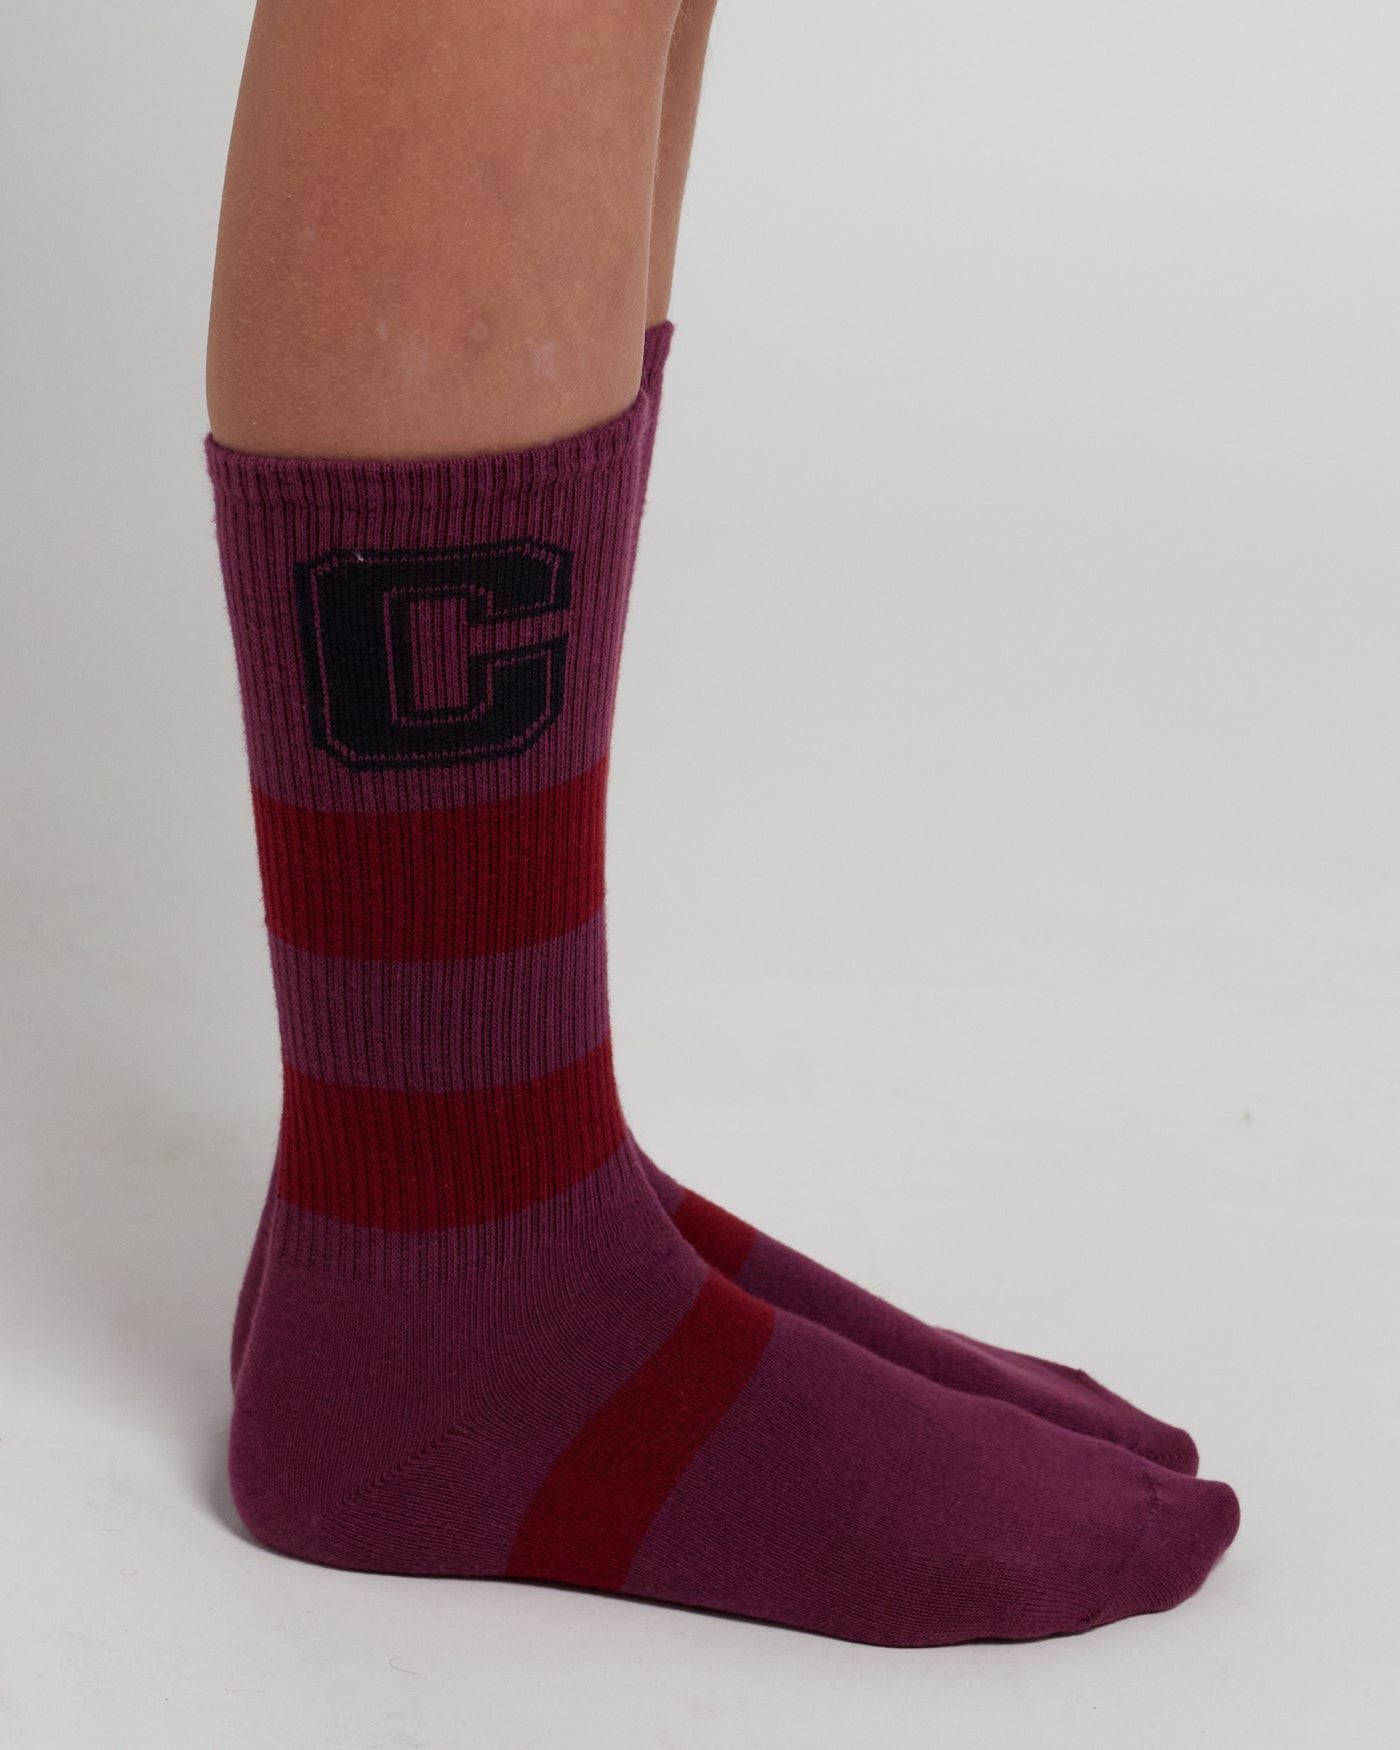 BC Striped Long Socks